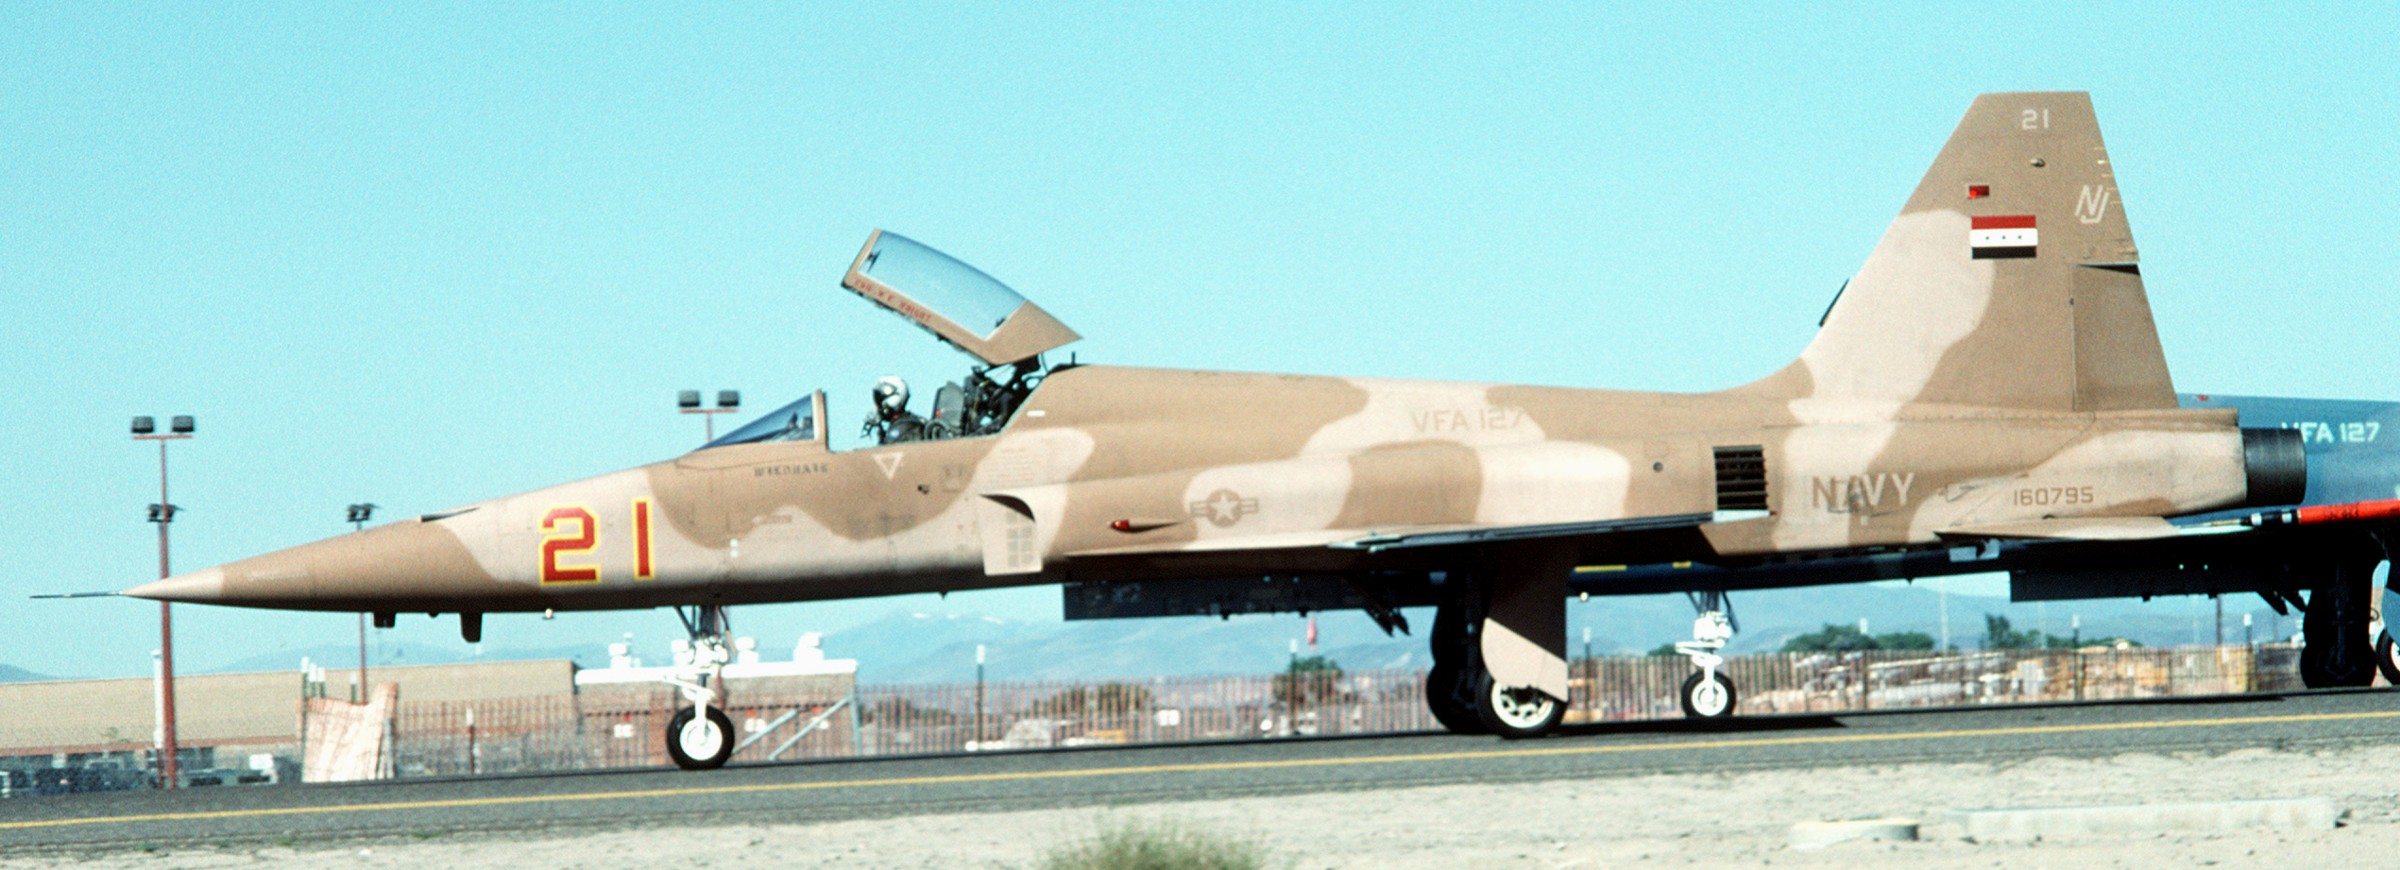 vfa-127 desert bogeys strike fighter squadron f-5e tiger 1993 32 fleet adversary